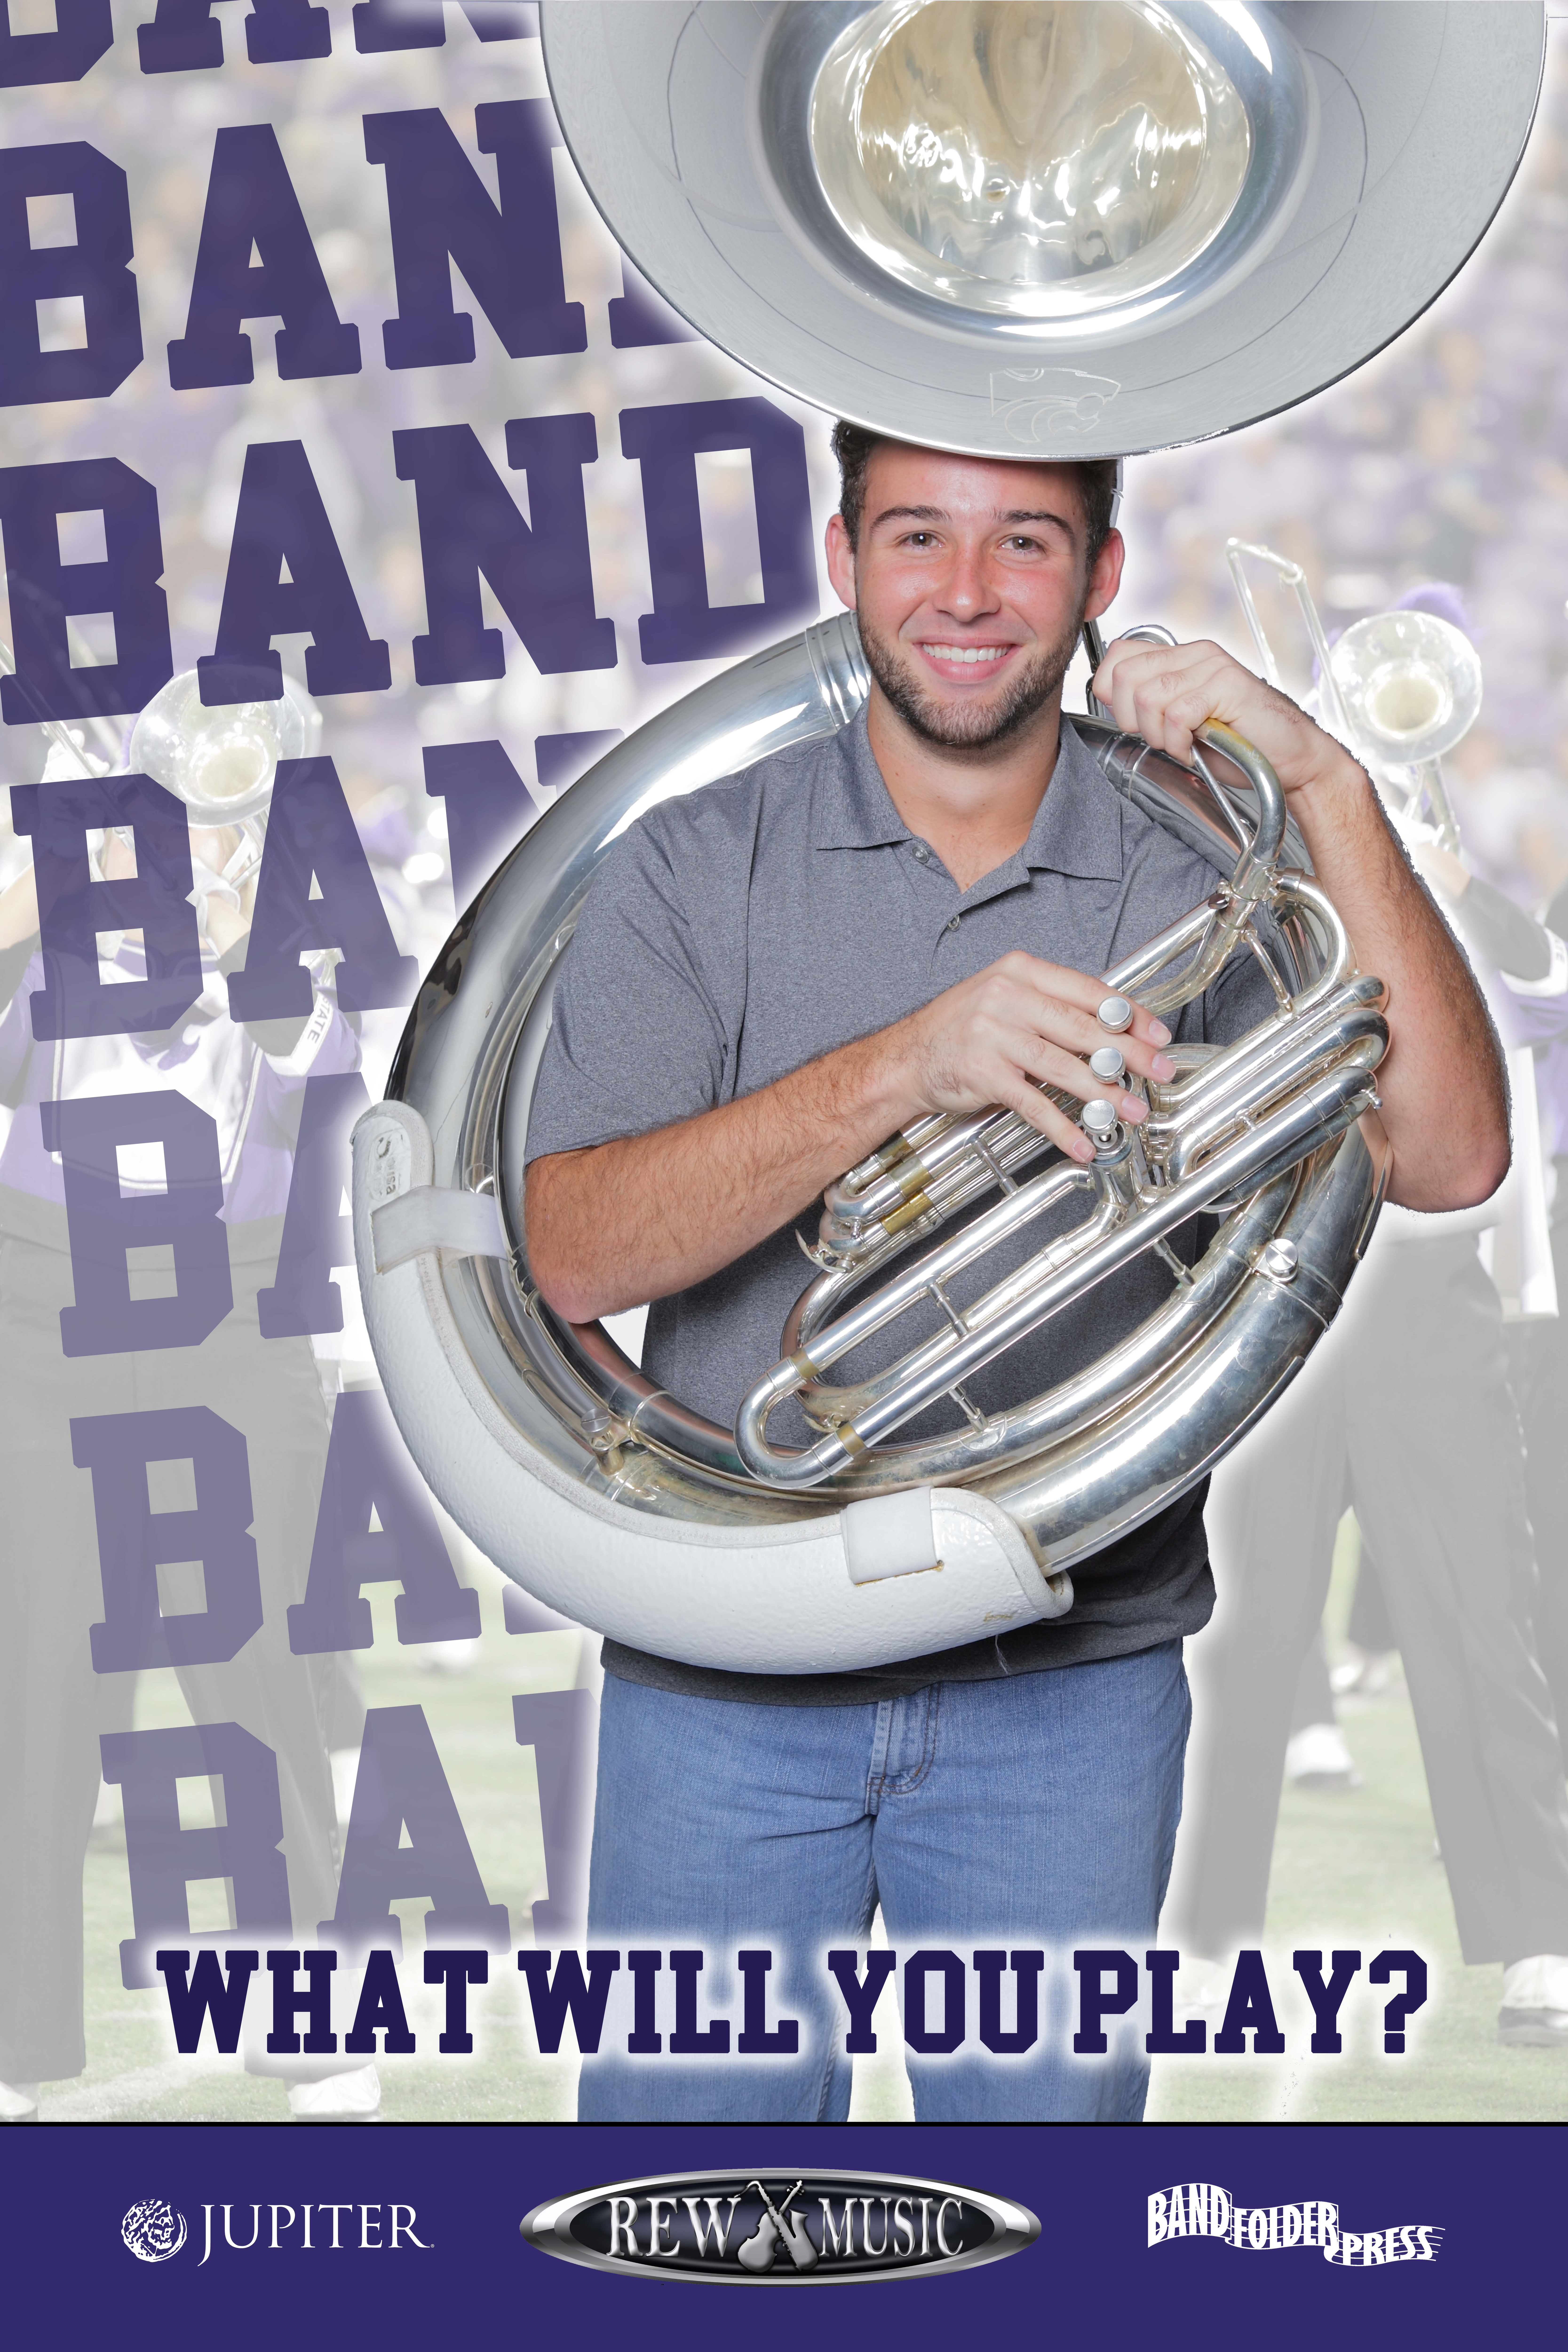 Join the School Band Tuba Sousaphone player